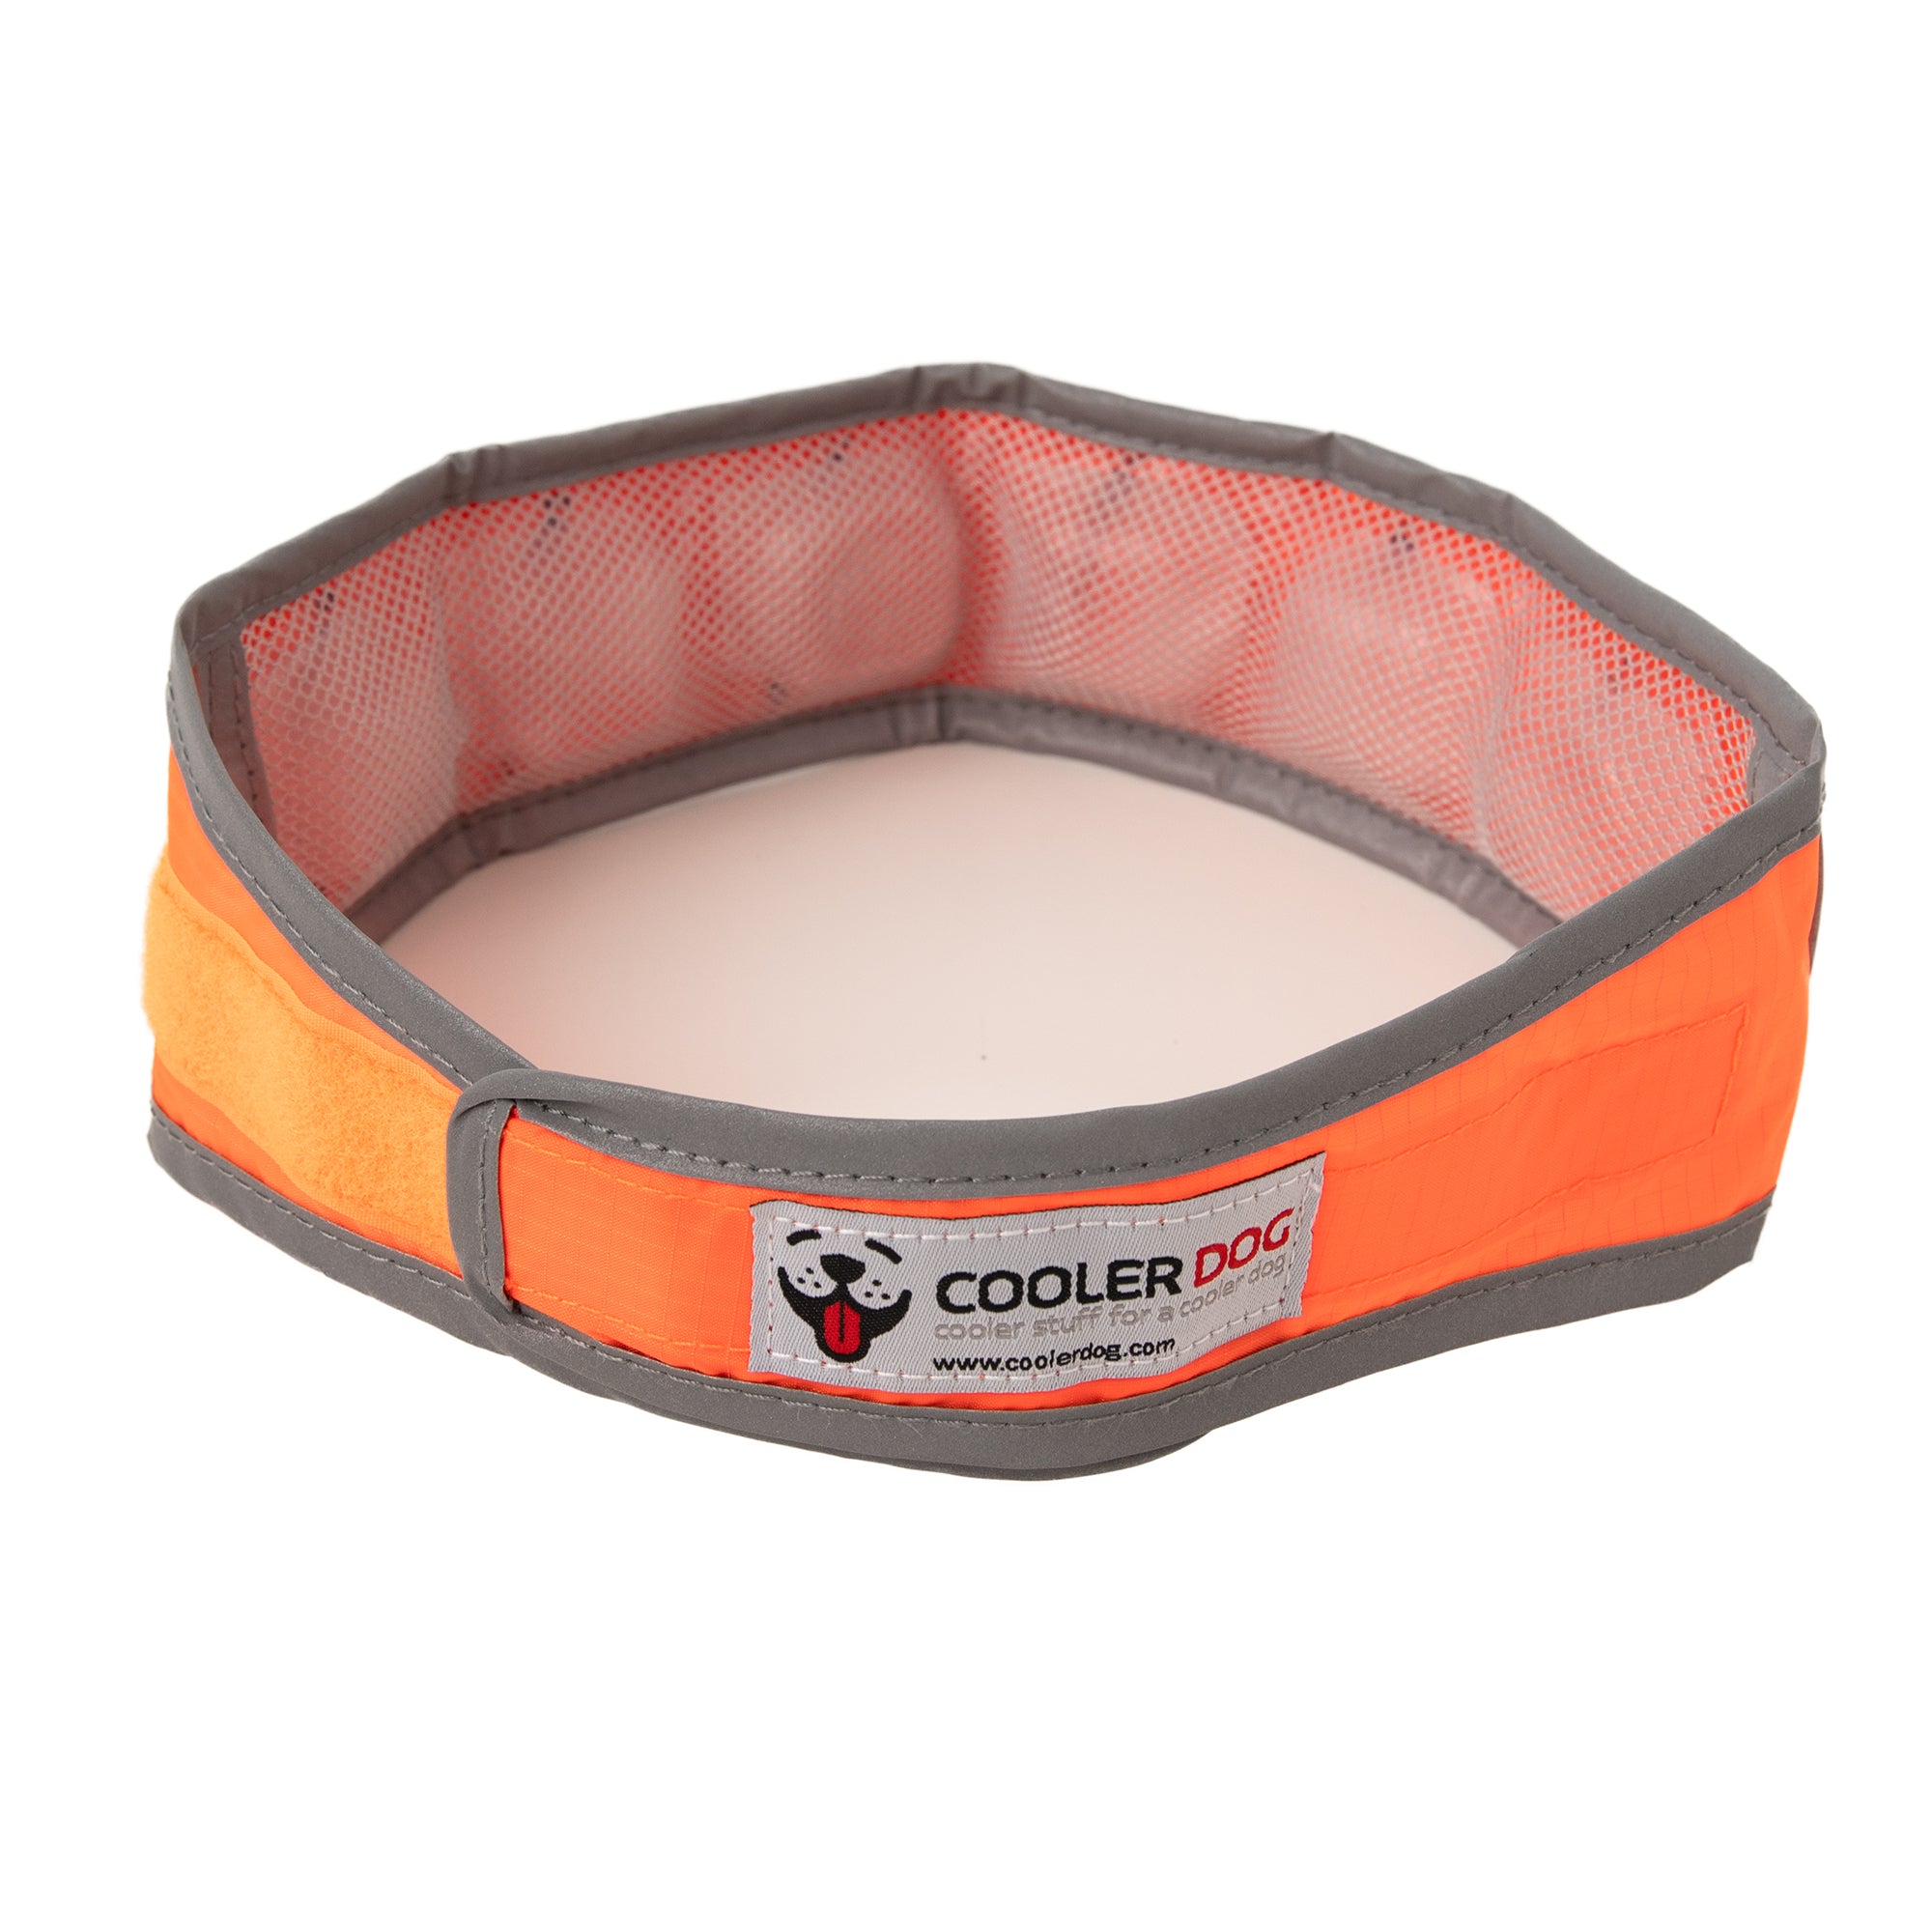 CoolerDog Hi-Vis collar, large, orange